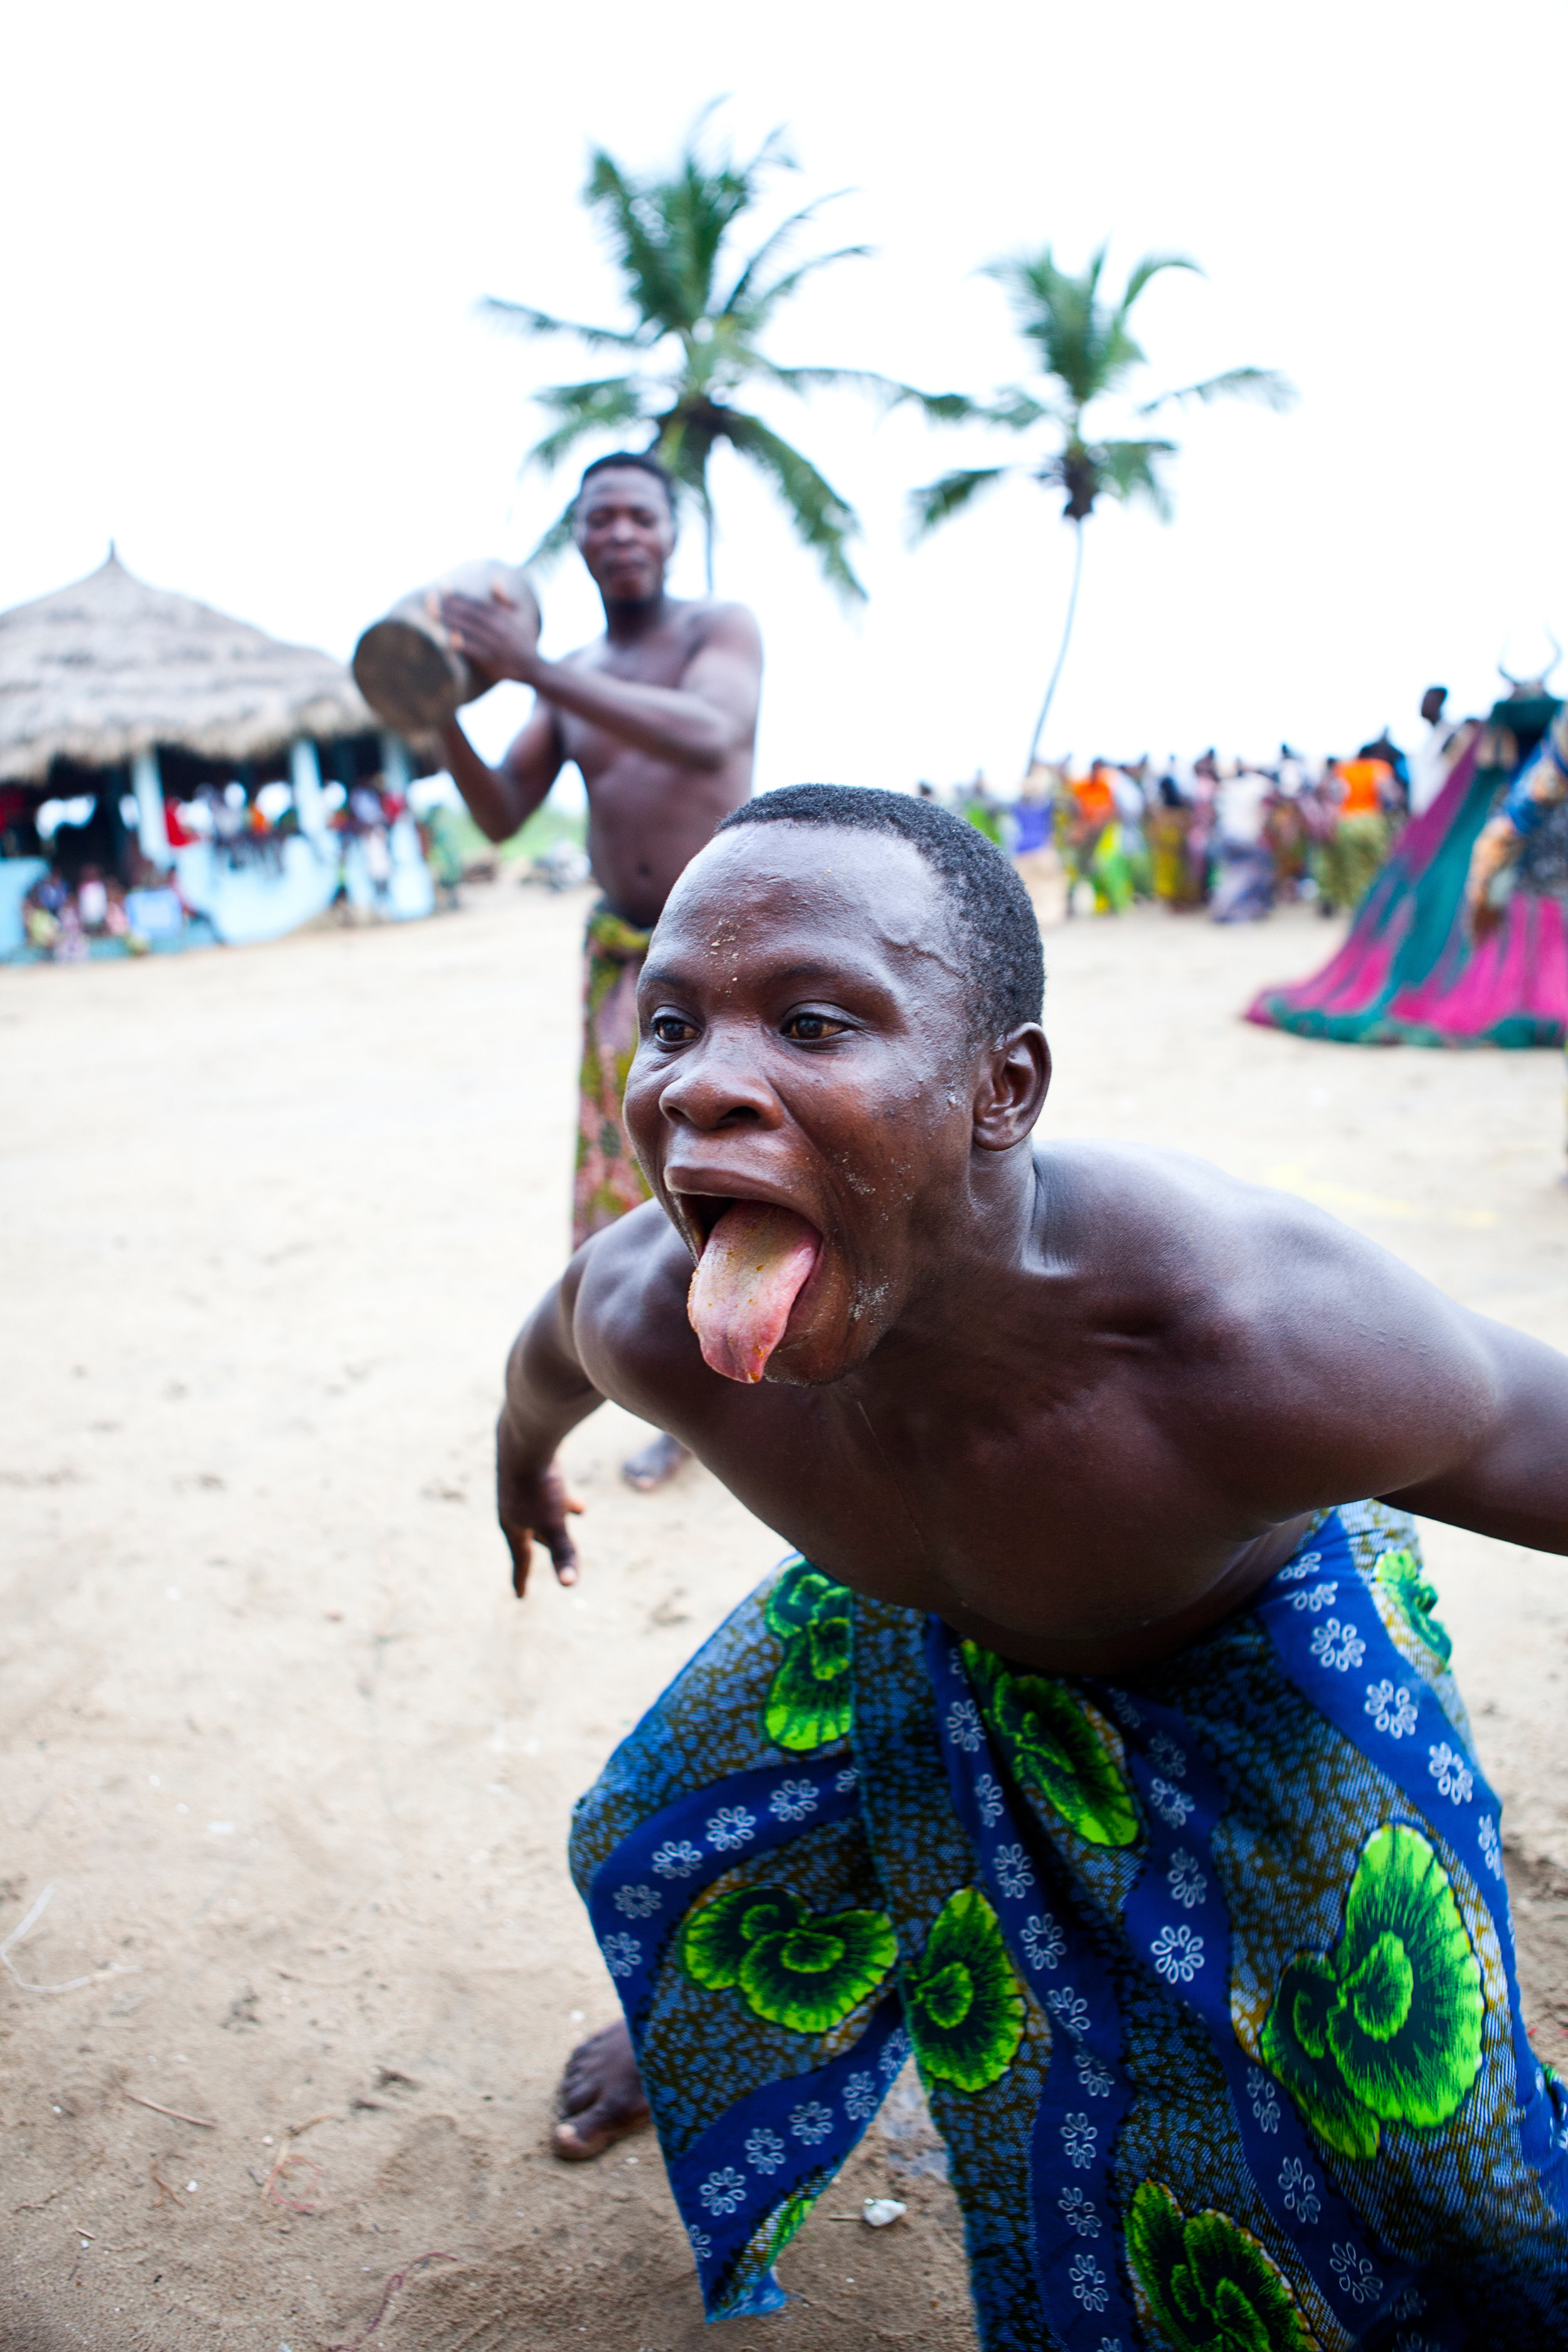 Man eating glass, Zangbeto ritual, Benin, West Africa.jpg